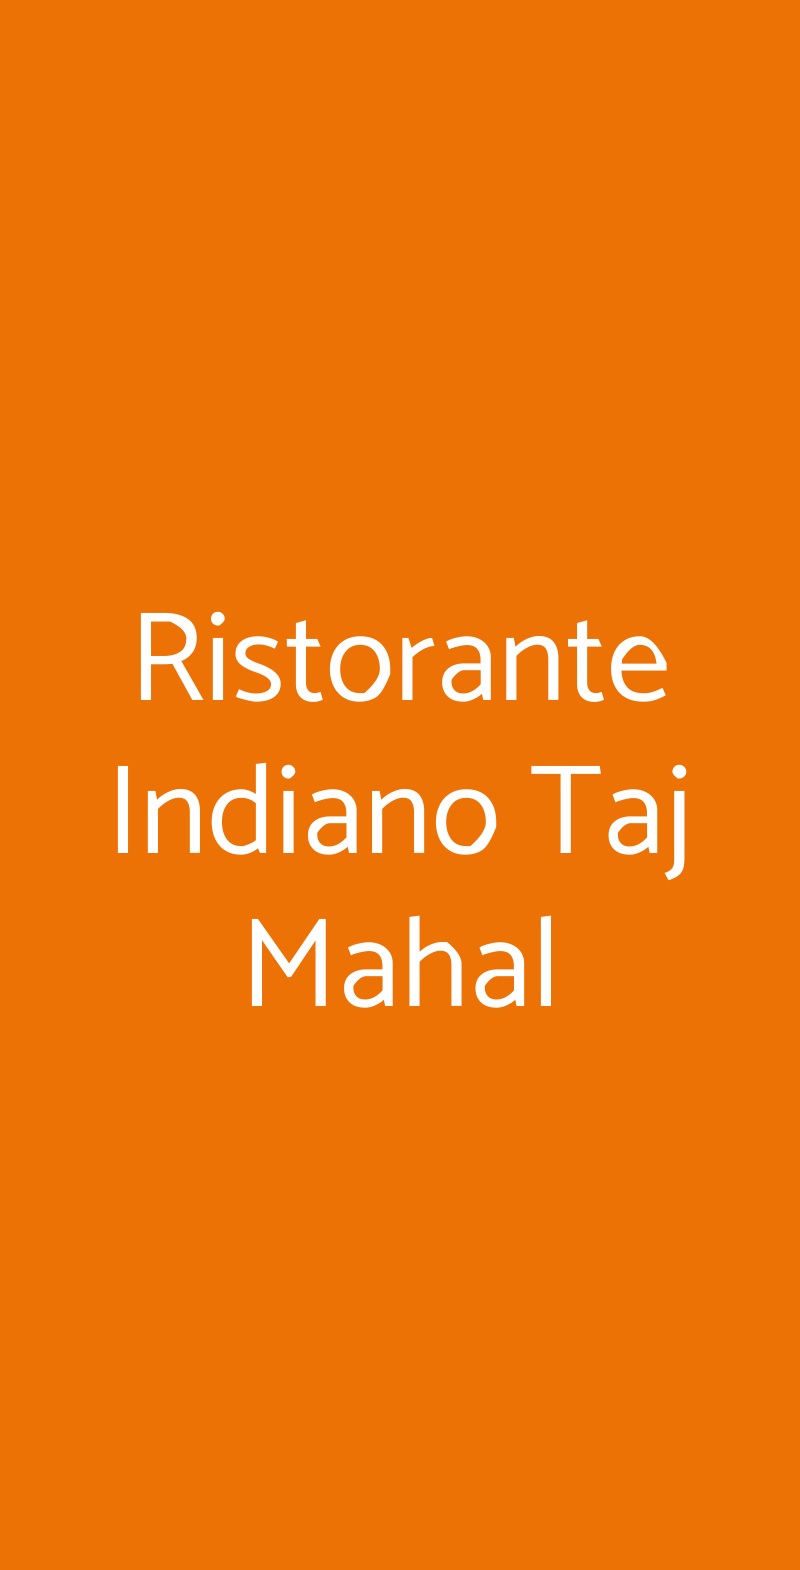 Ristorante Indiano Taj Mahal Torino menù 1 pagina